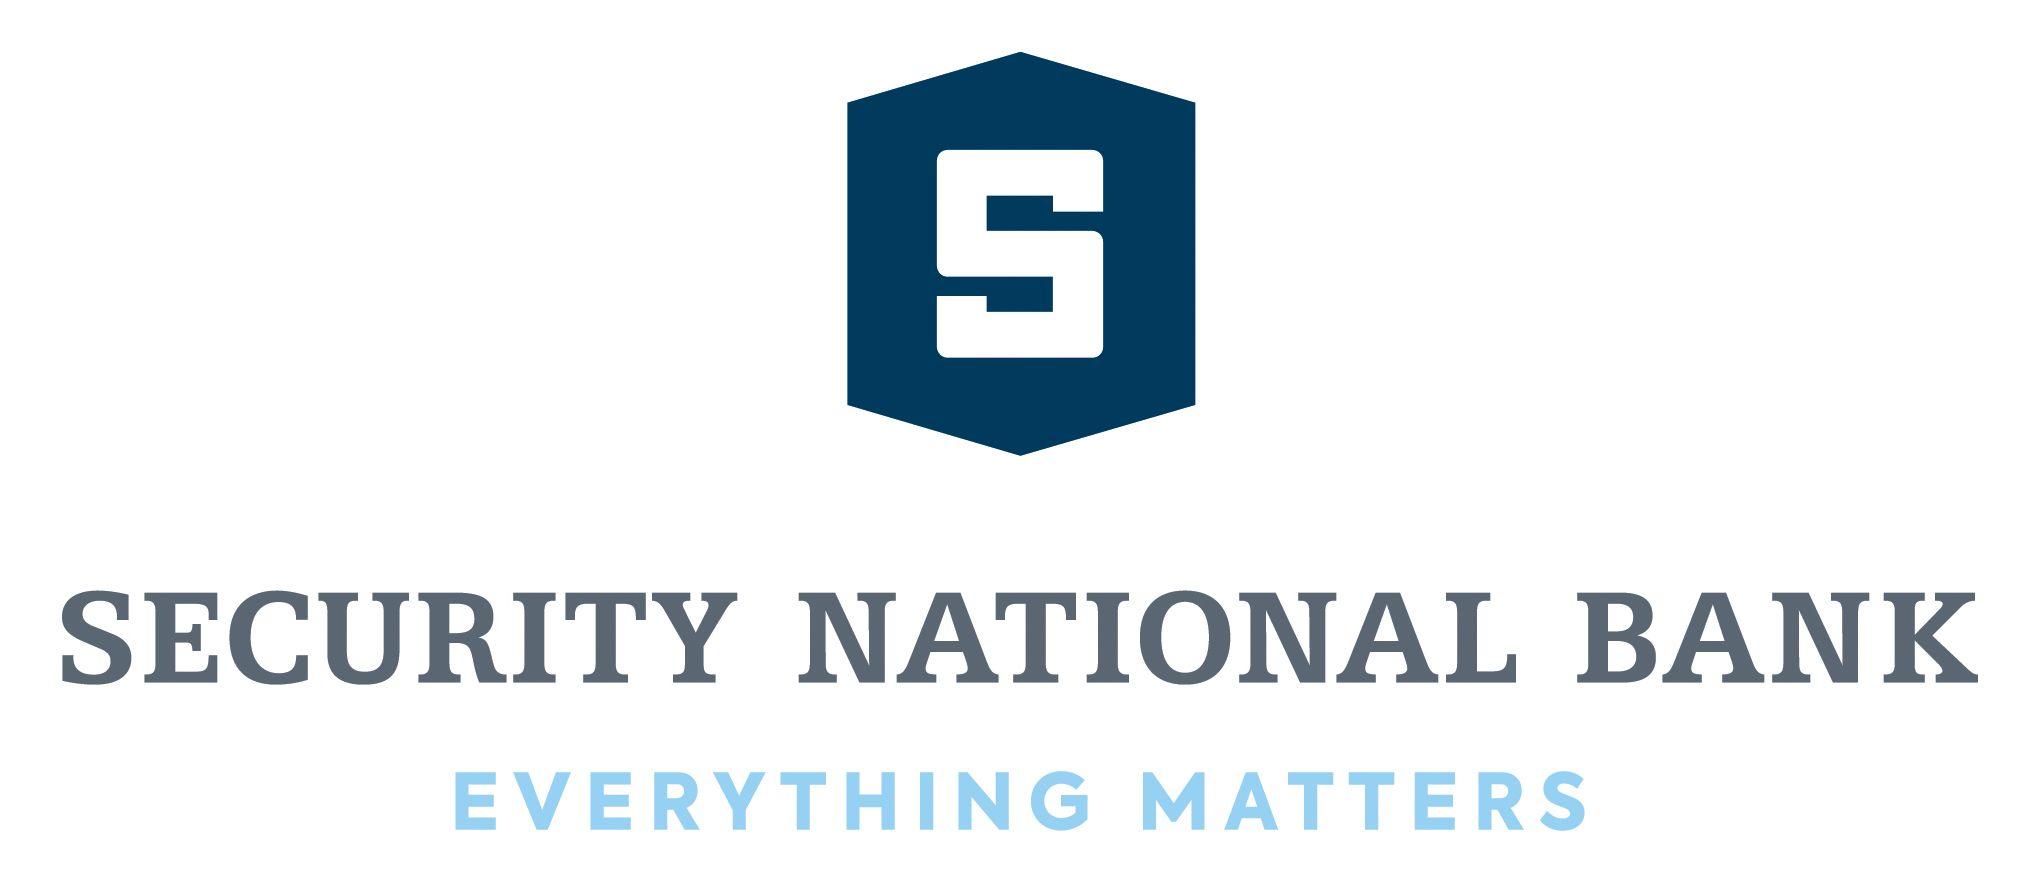 Www.bank Logo - Security National Bank Reveals New Brand Identity